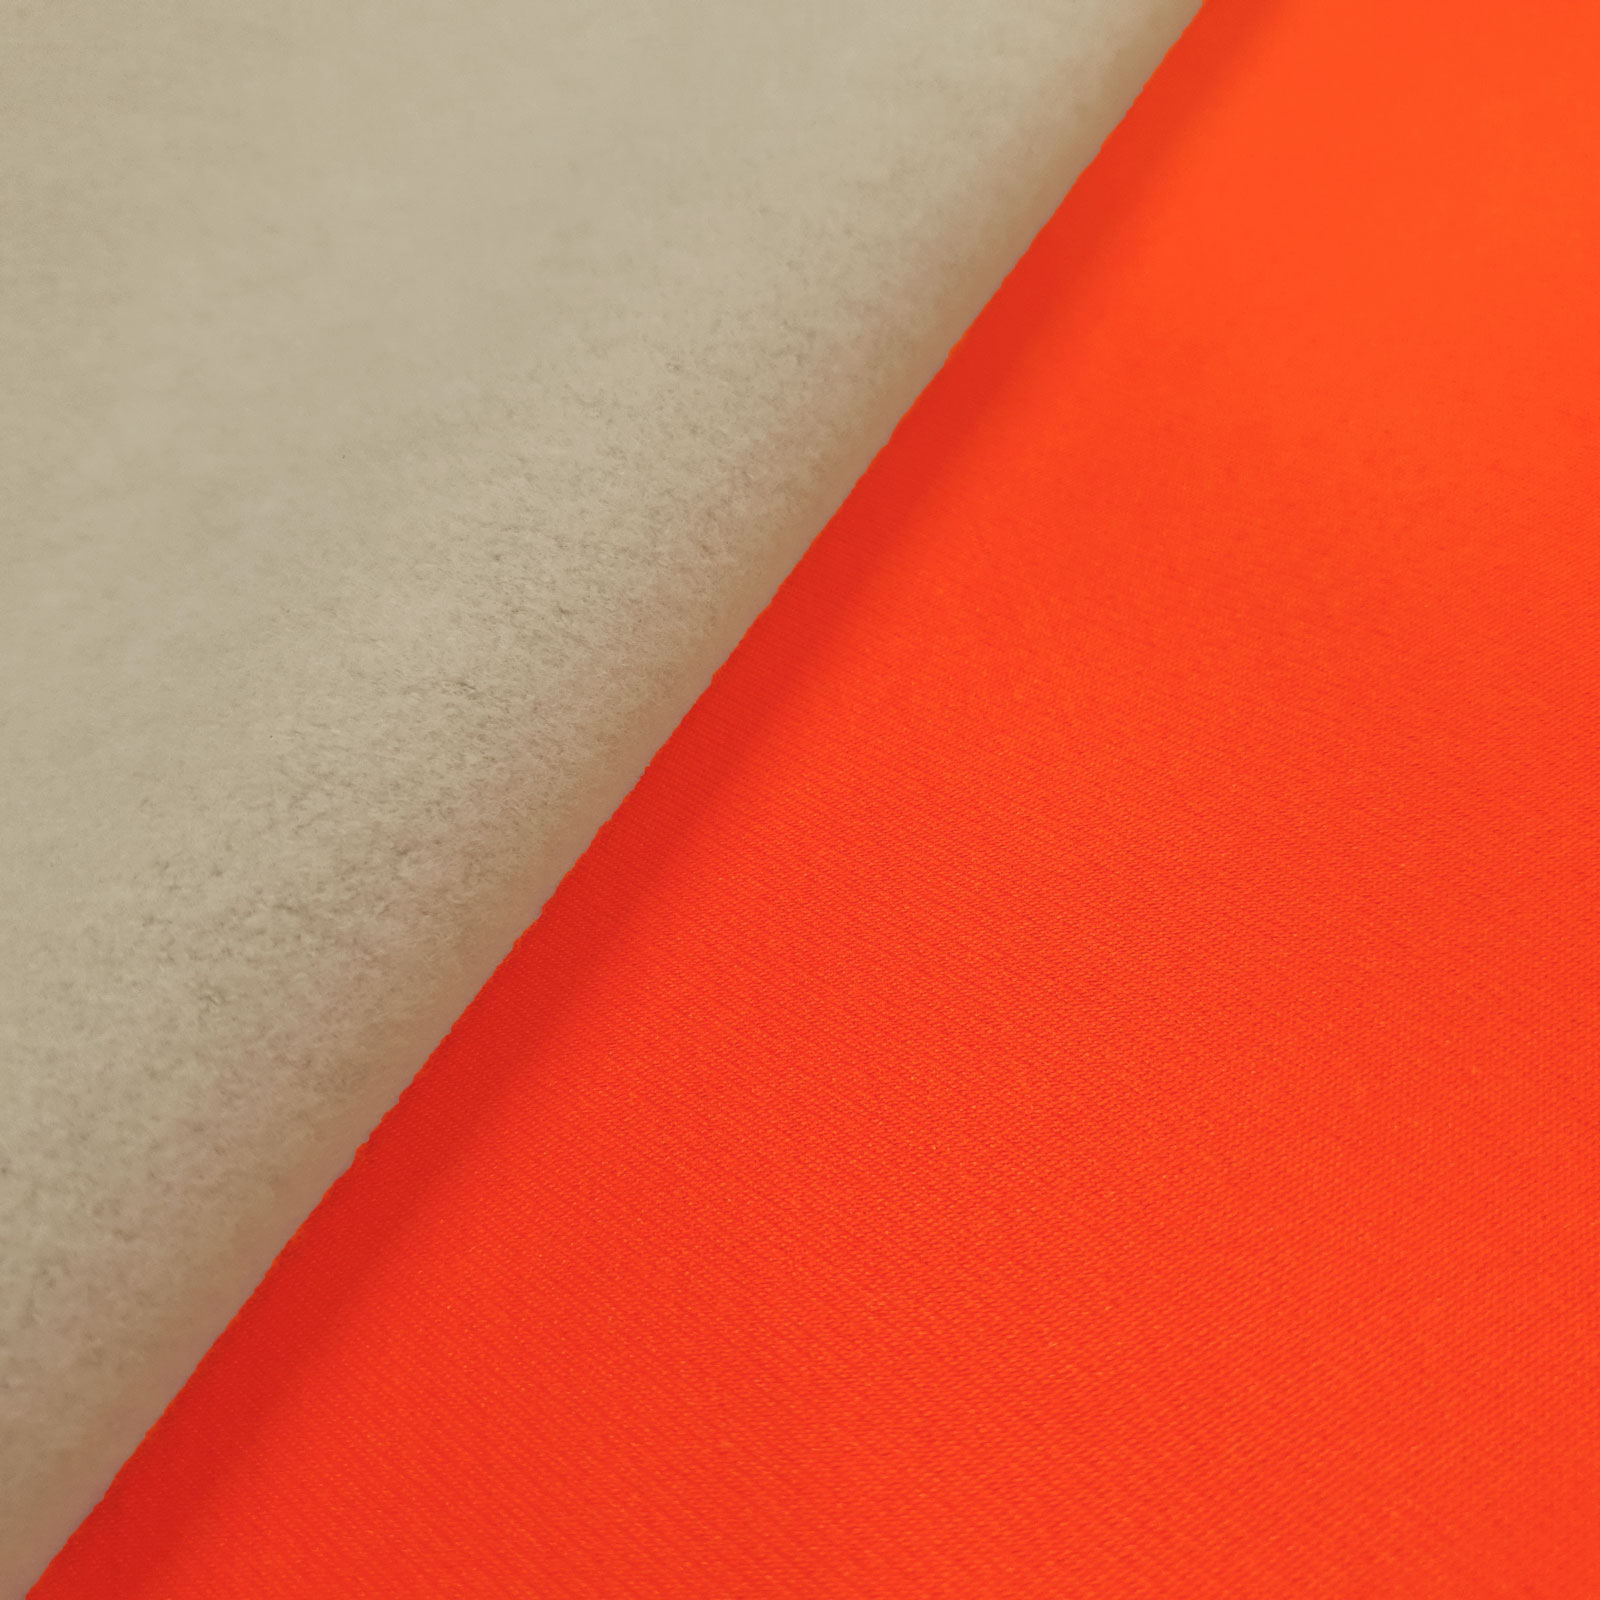 Taio - Softshell / Bonding with wool - Neon orange EN20471